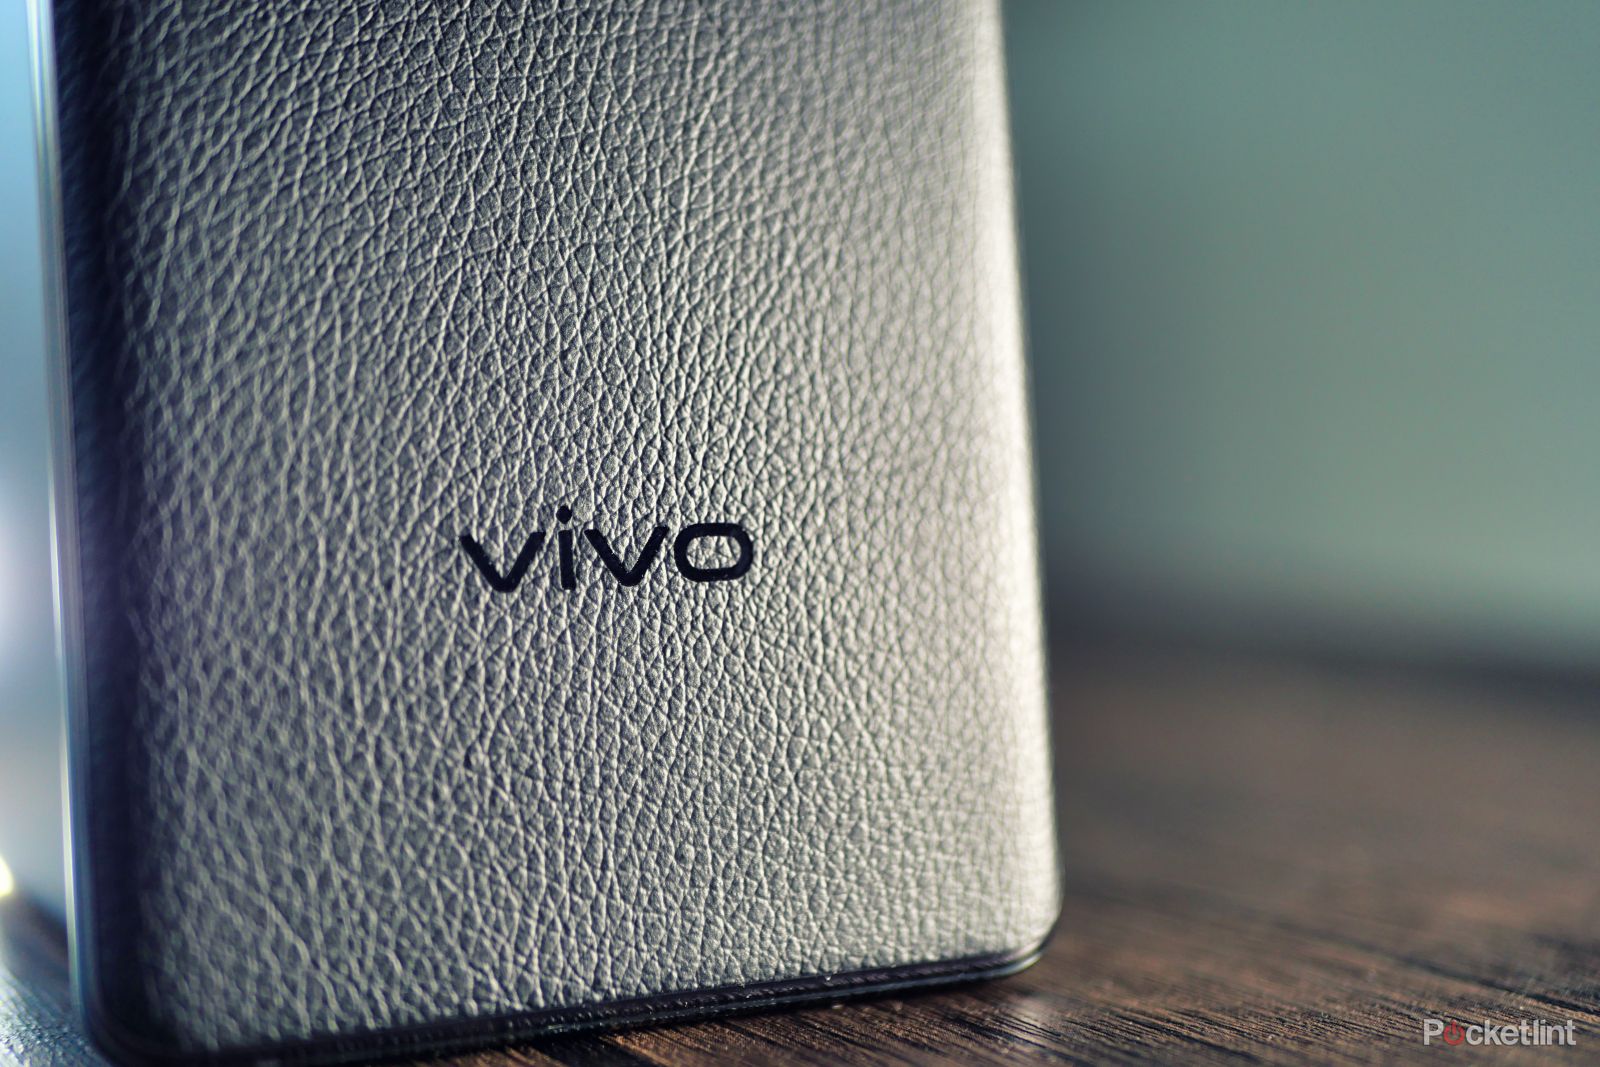 Vivo X90 Pro back panel with Vivo logo